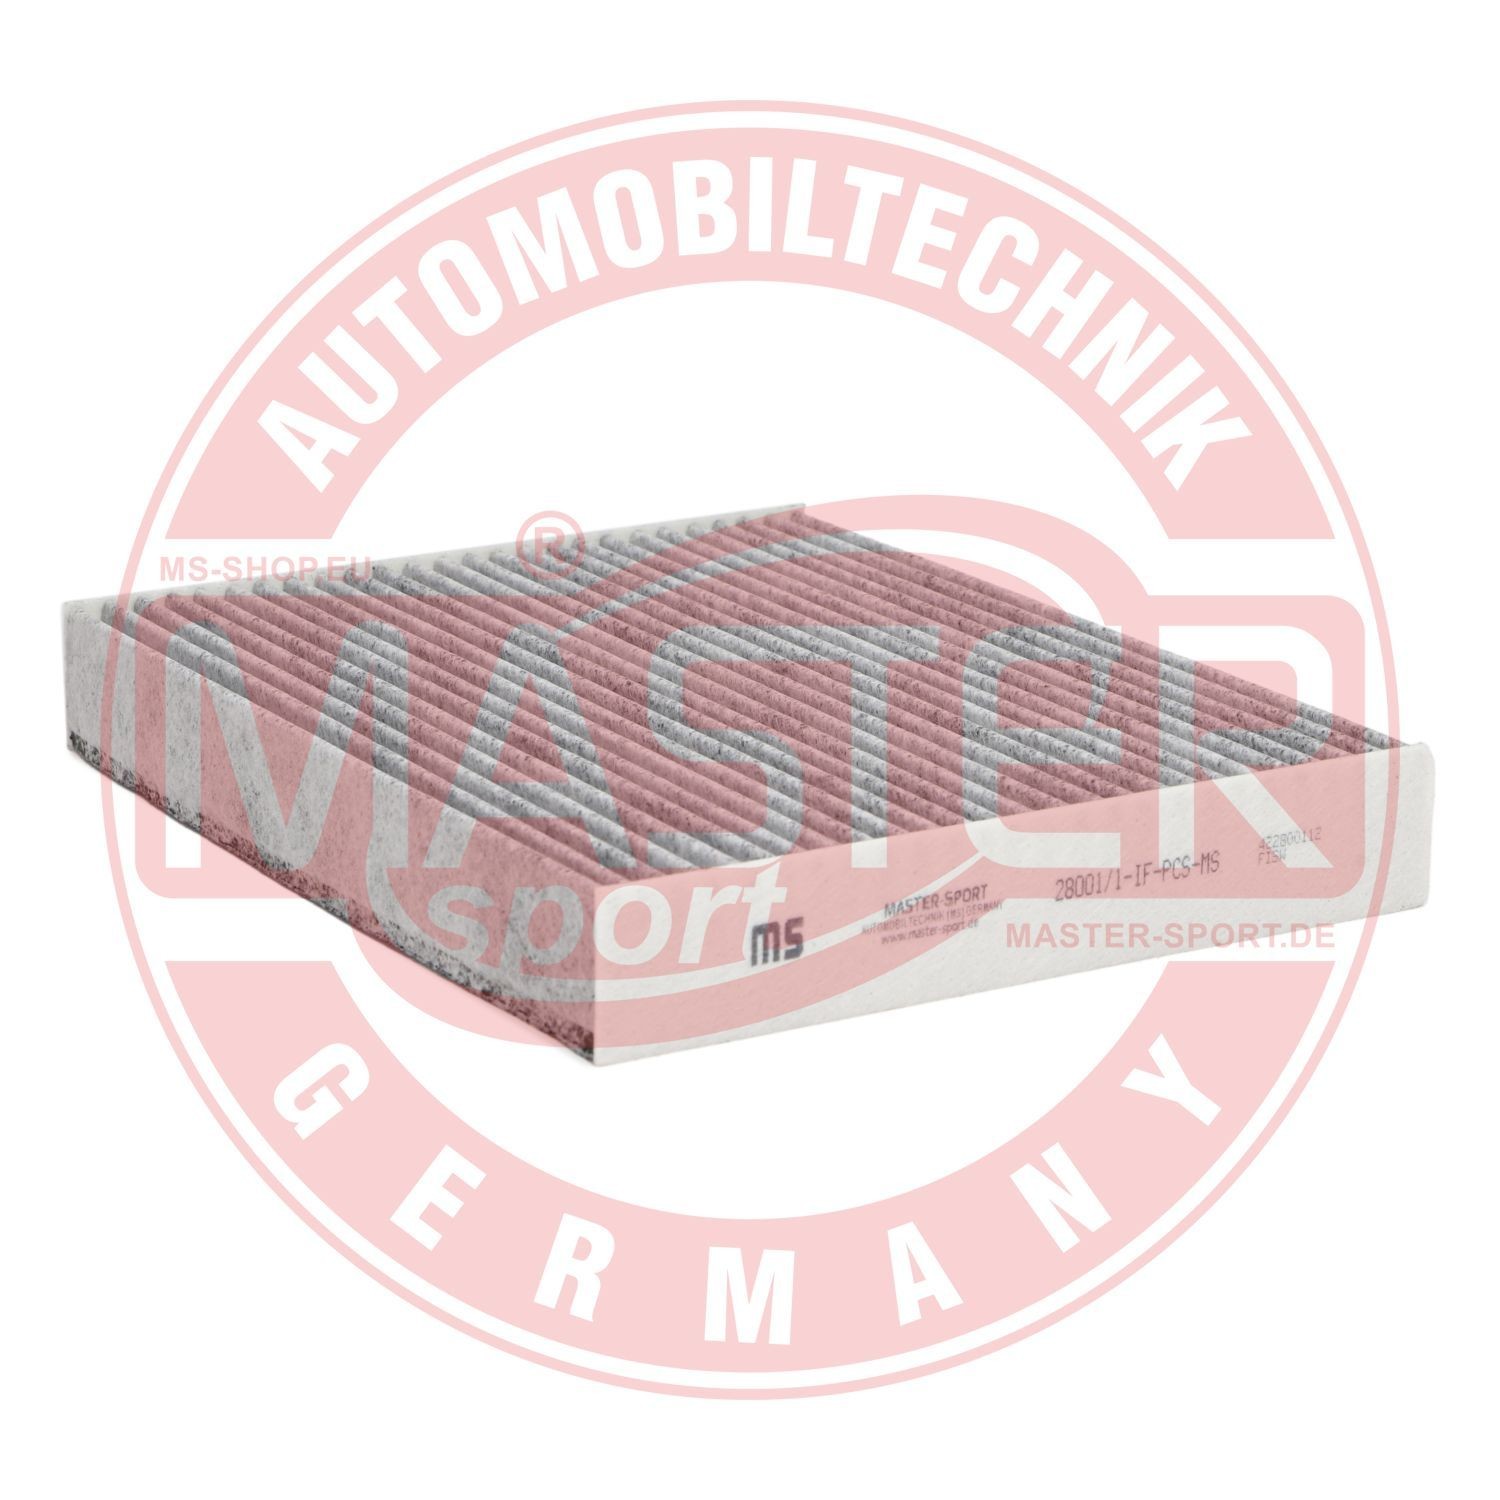 Ford TRANSIT Pollen filter 15307918 MASTER-SPORT 28001/1-IF-PCS-MS online buy